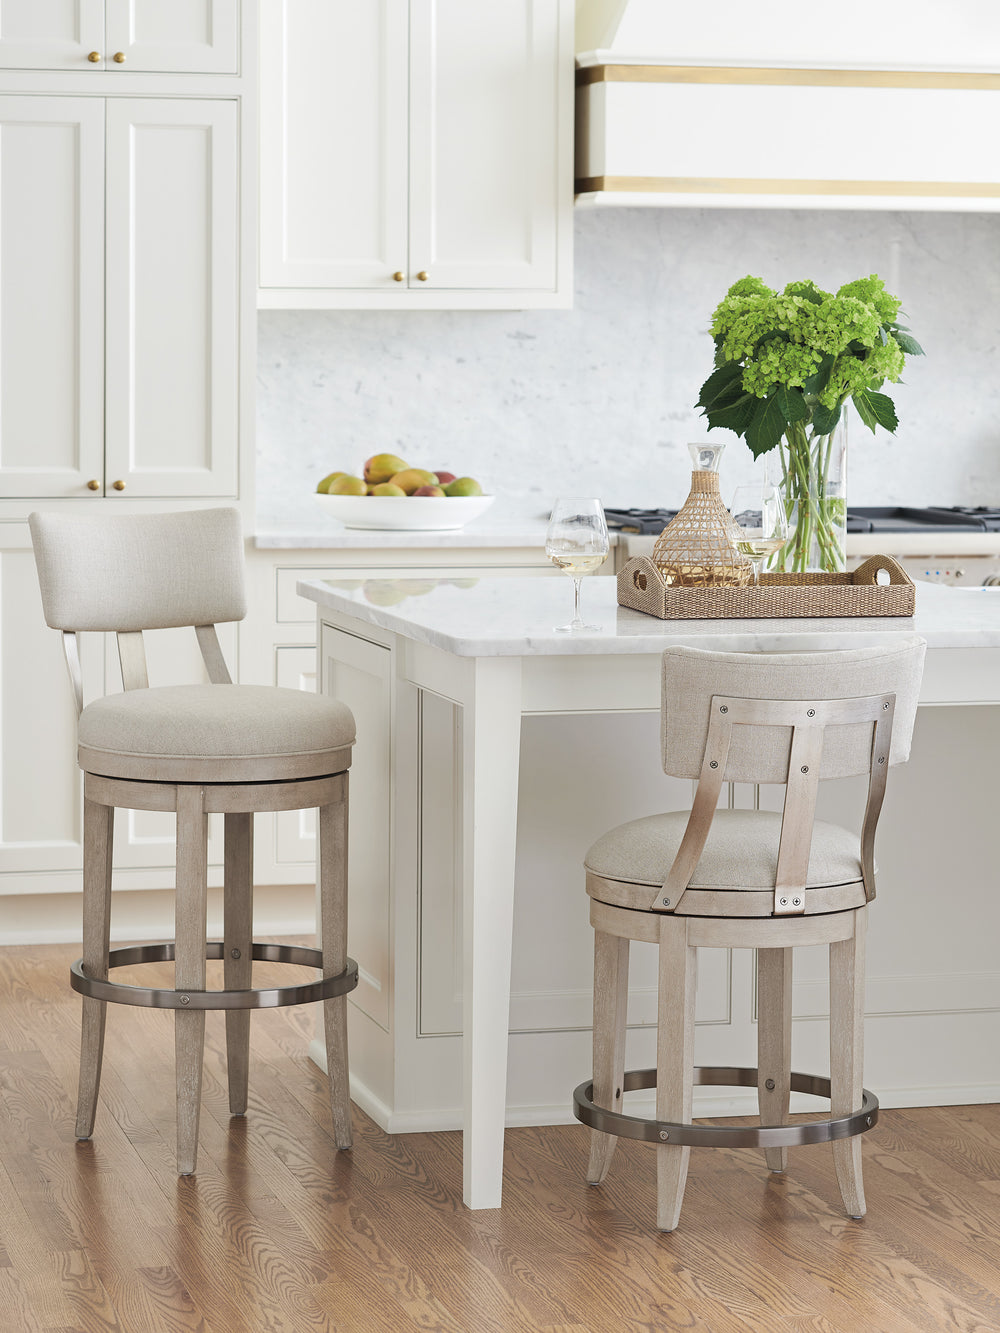 American Home Furniture | Barclay Butera  - Malibu Cliffside Swivel Upholstered Counter Stool